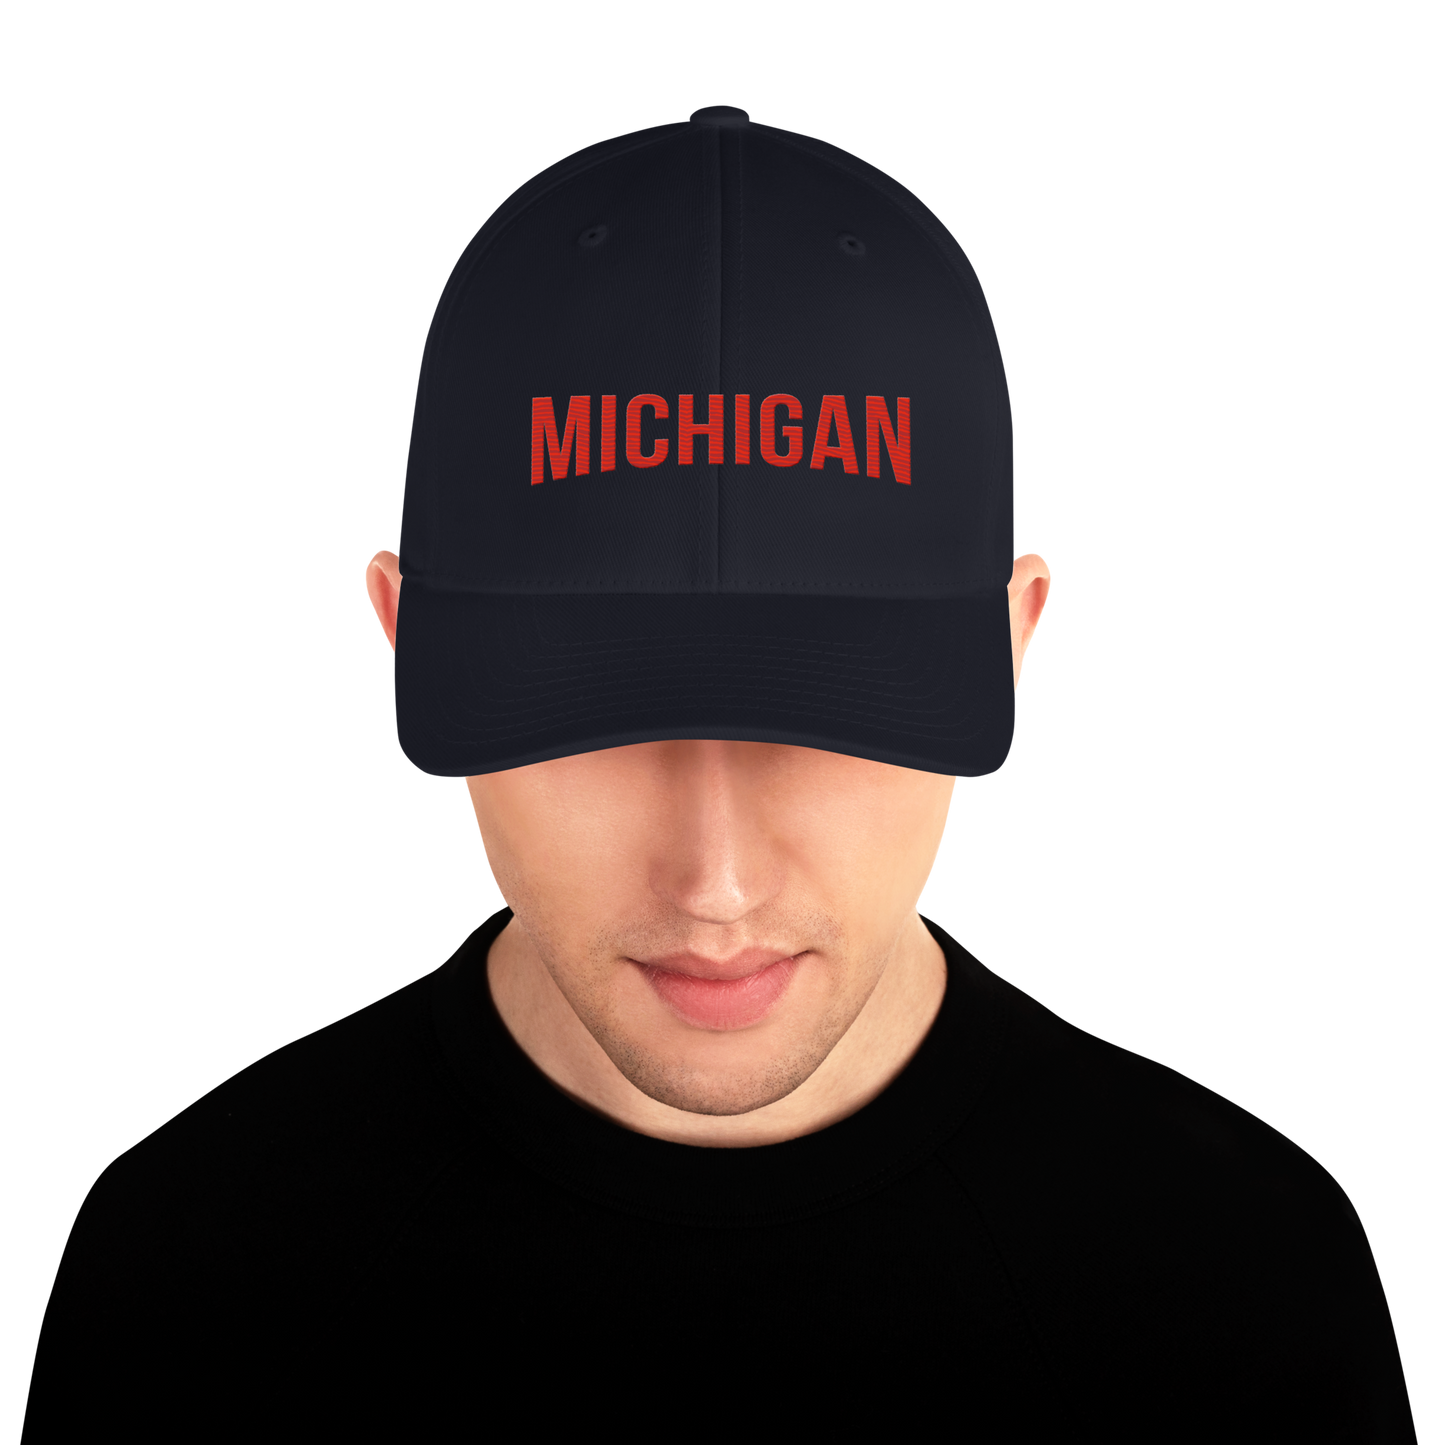 'Michigan' Fitted Baseball Cap | Streaming Parody